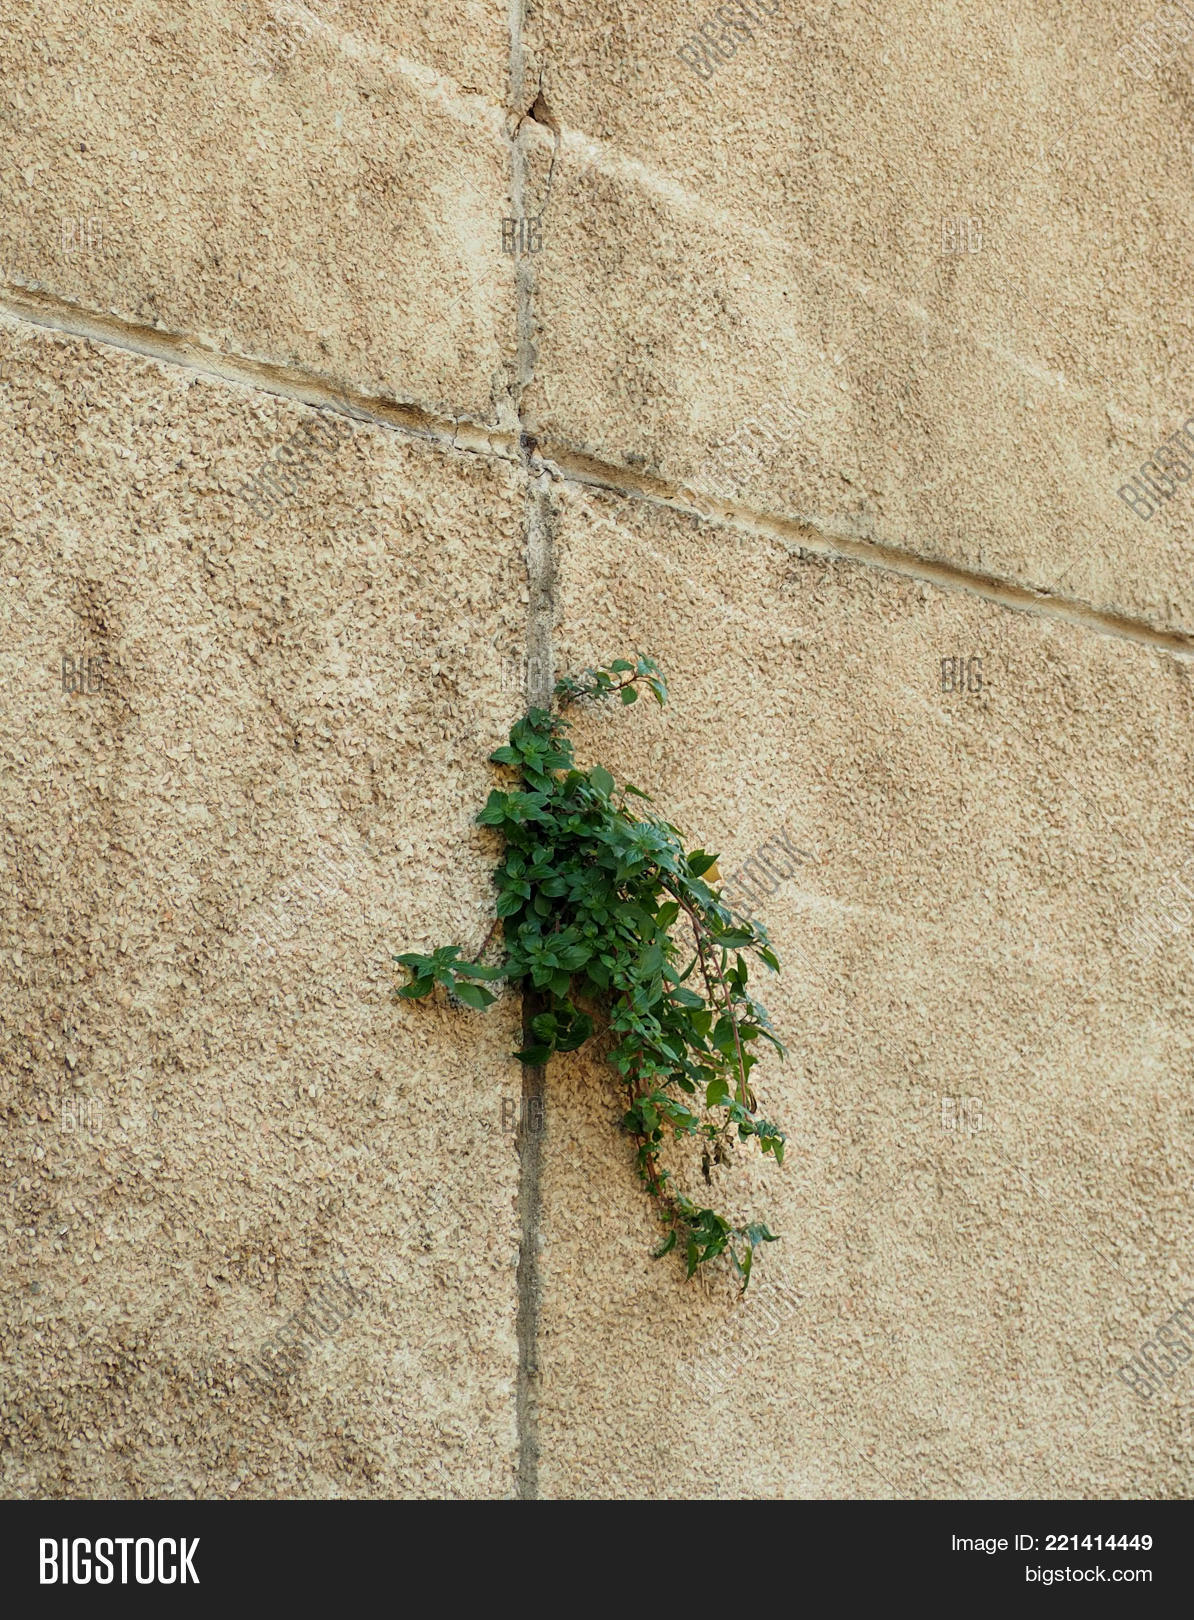 Tree Growing Through Cracked Wall. Image & Photo | Bigstock